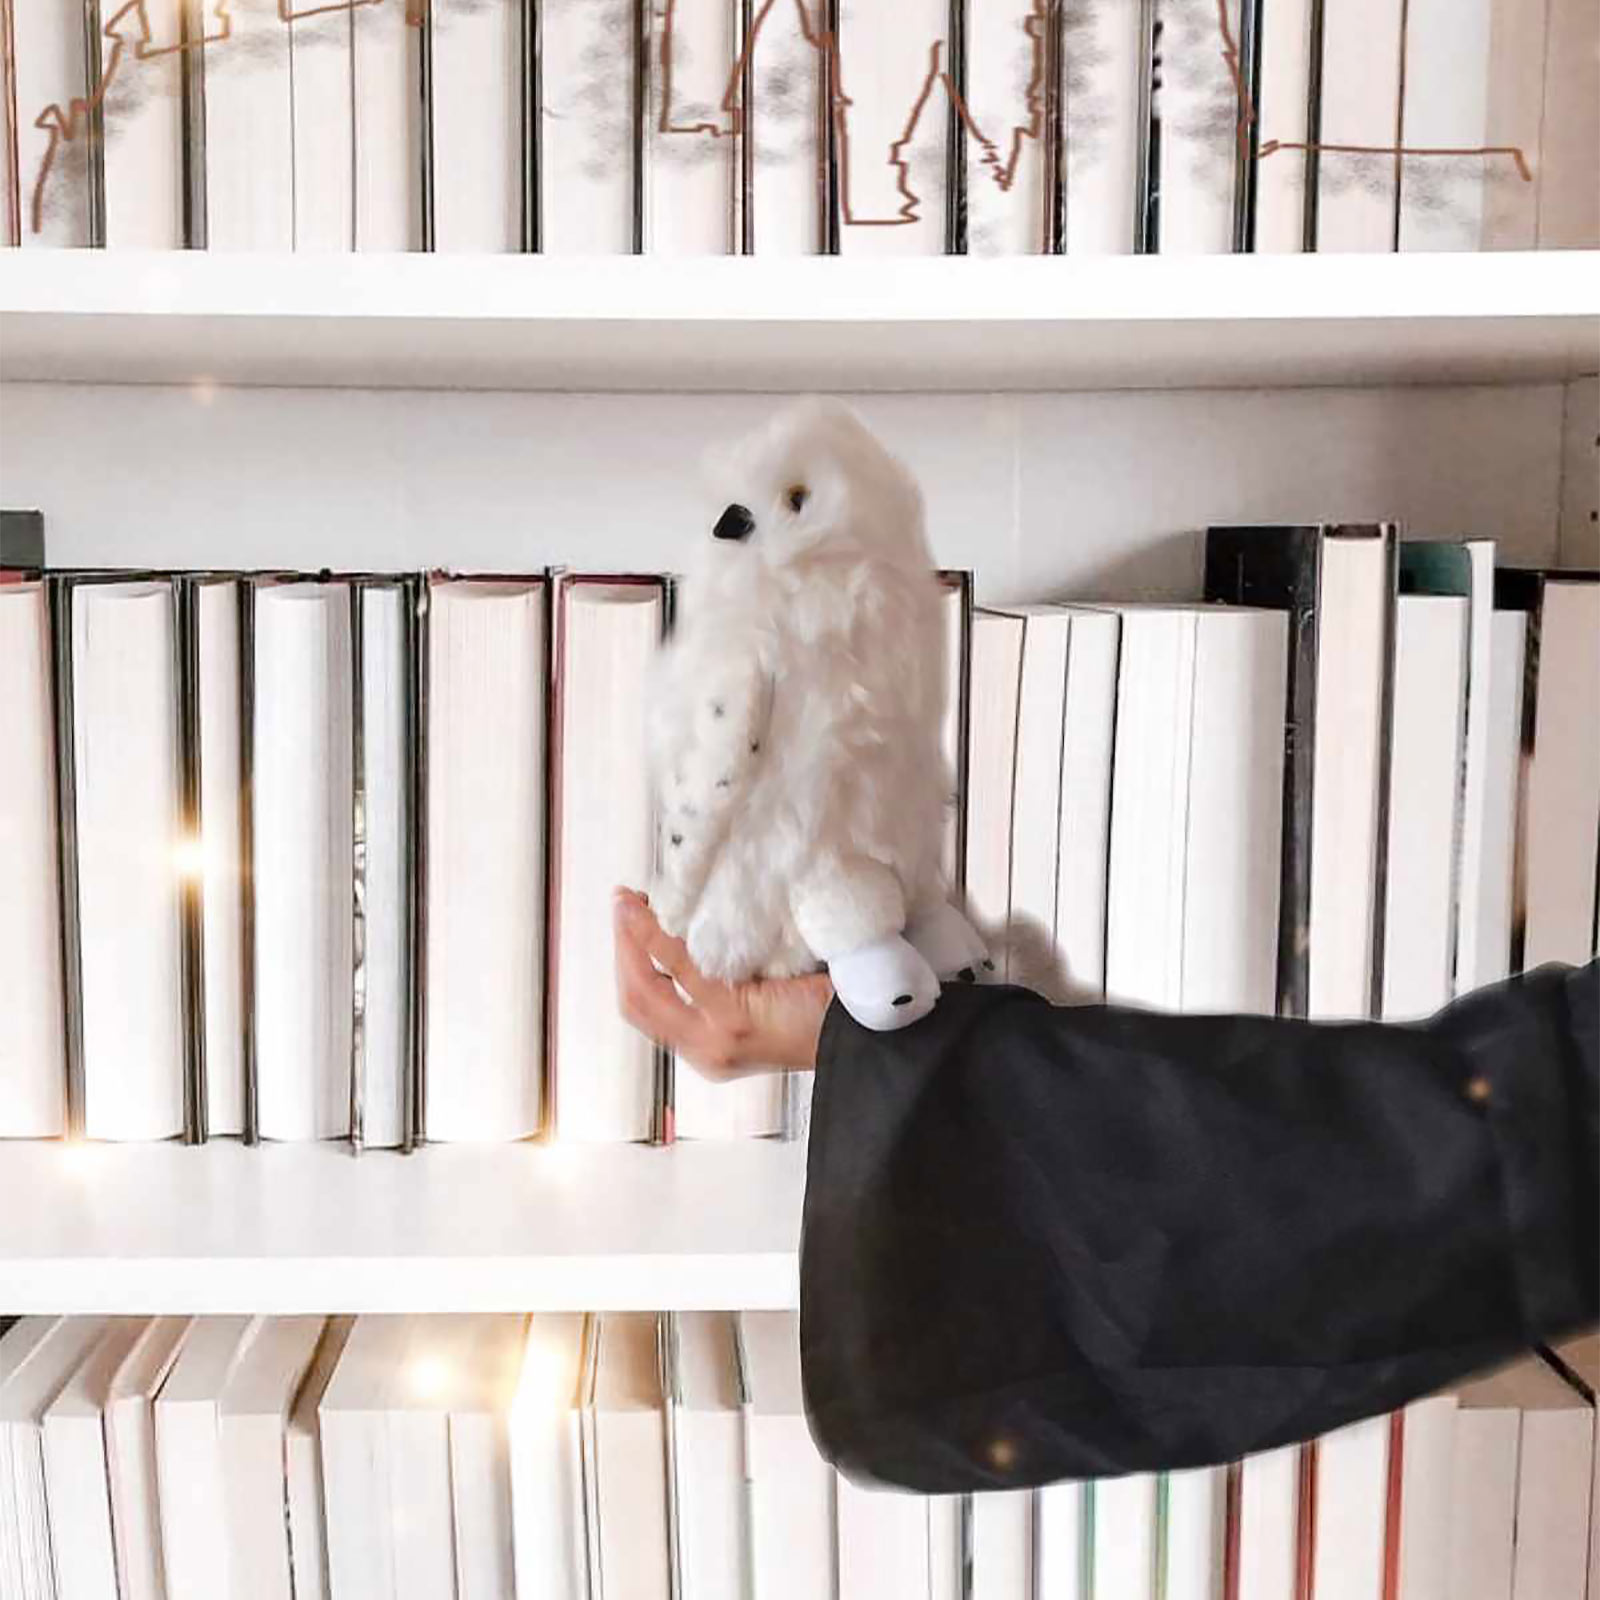 Harry Potter - Figurine en peluche Hedwig